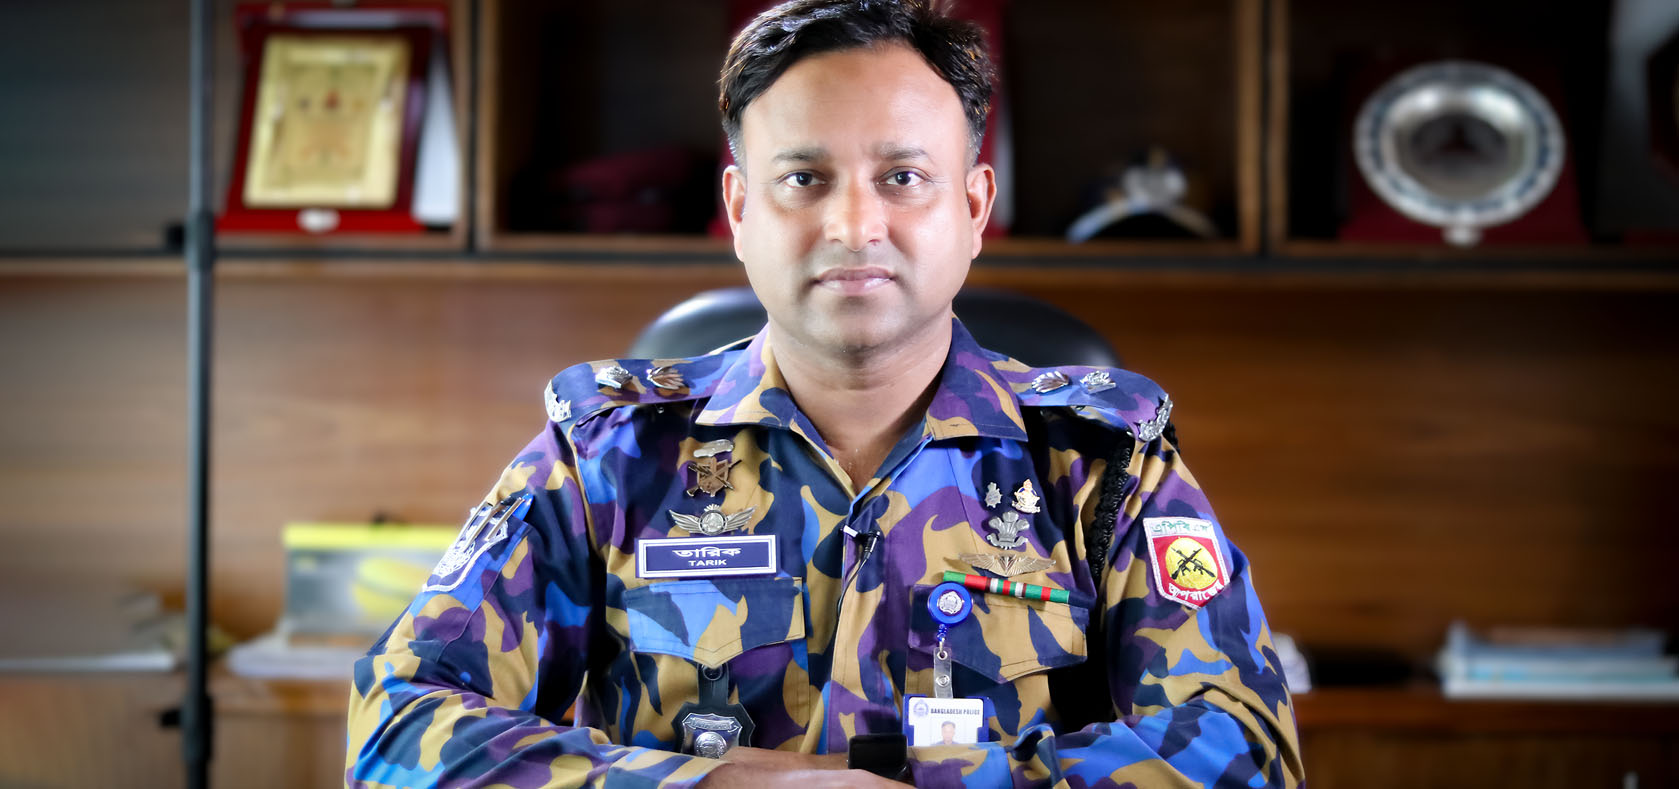 Tarikul Islam, Superintendent of Police at Bangladesh Police’s Armed Forces Battalion in Cox’s Bazar, Bangladesh, poses at his office on 9 June 2021. Photo: UN Women/Mahmudul Karim